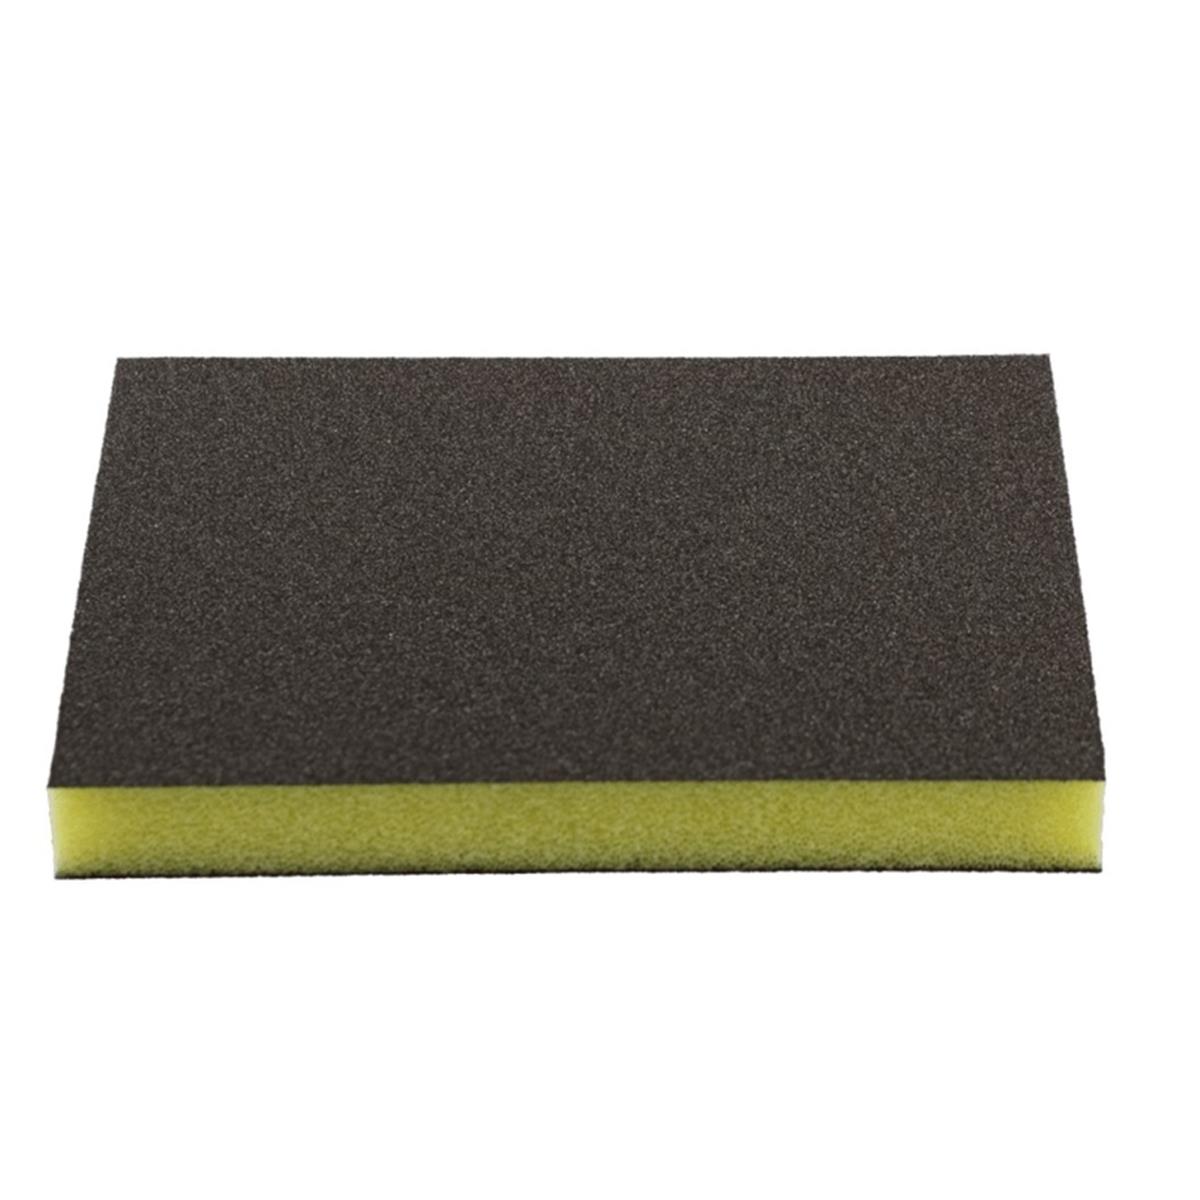 Picture of Freud America 1018160 100 Grit Fine Ultraflex Sanding Sponge - Pack of 2